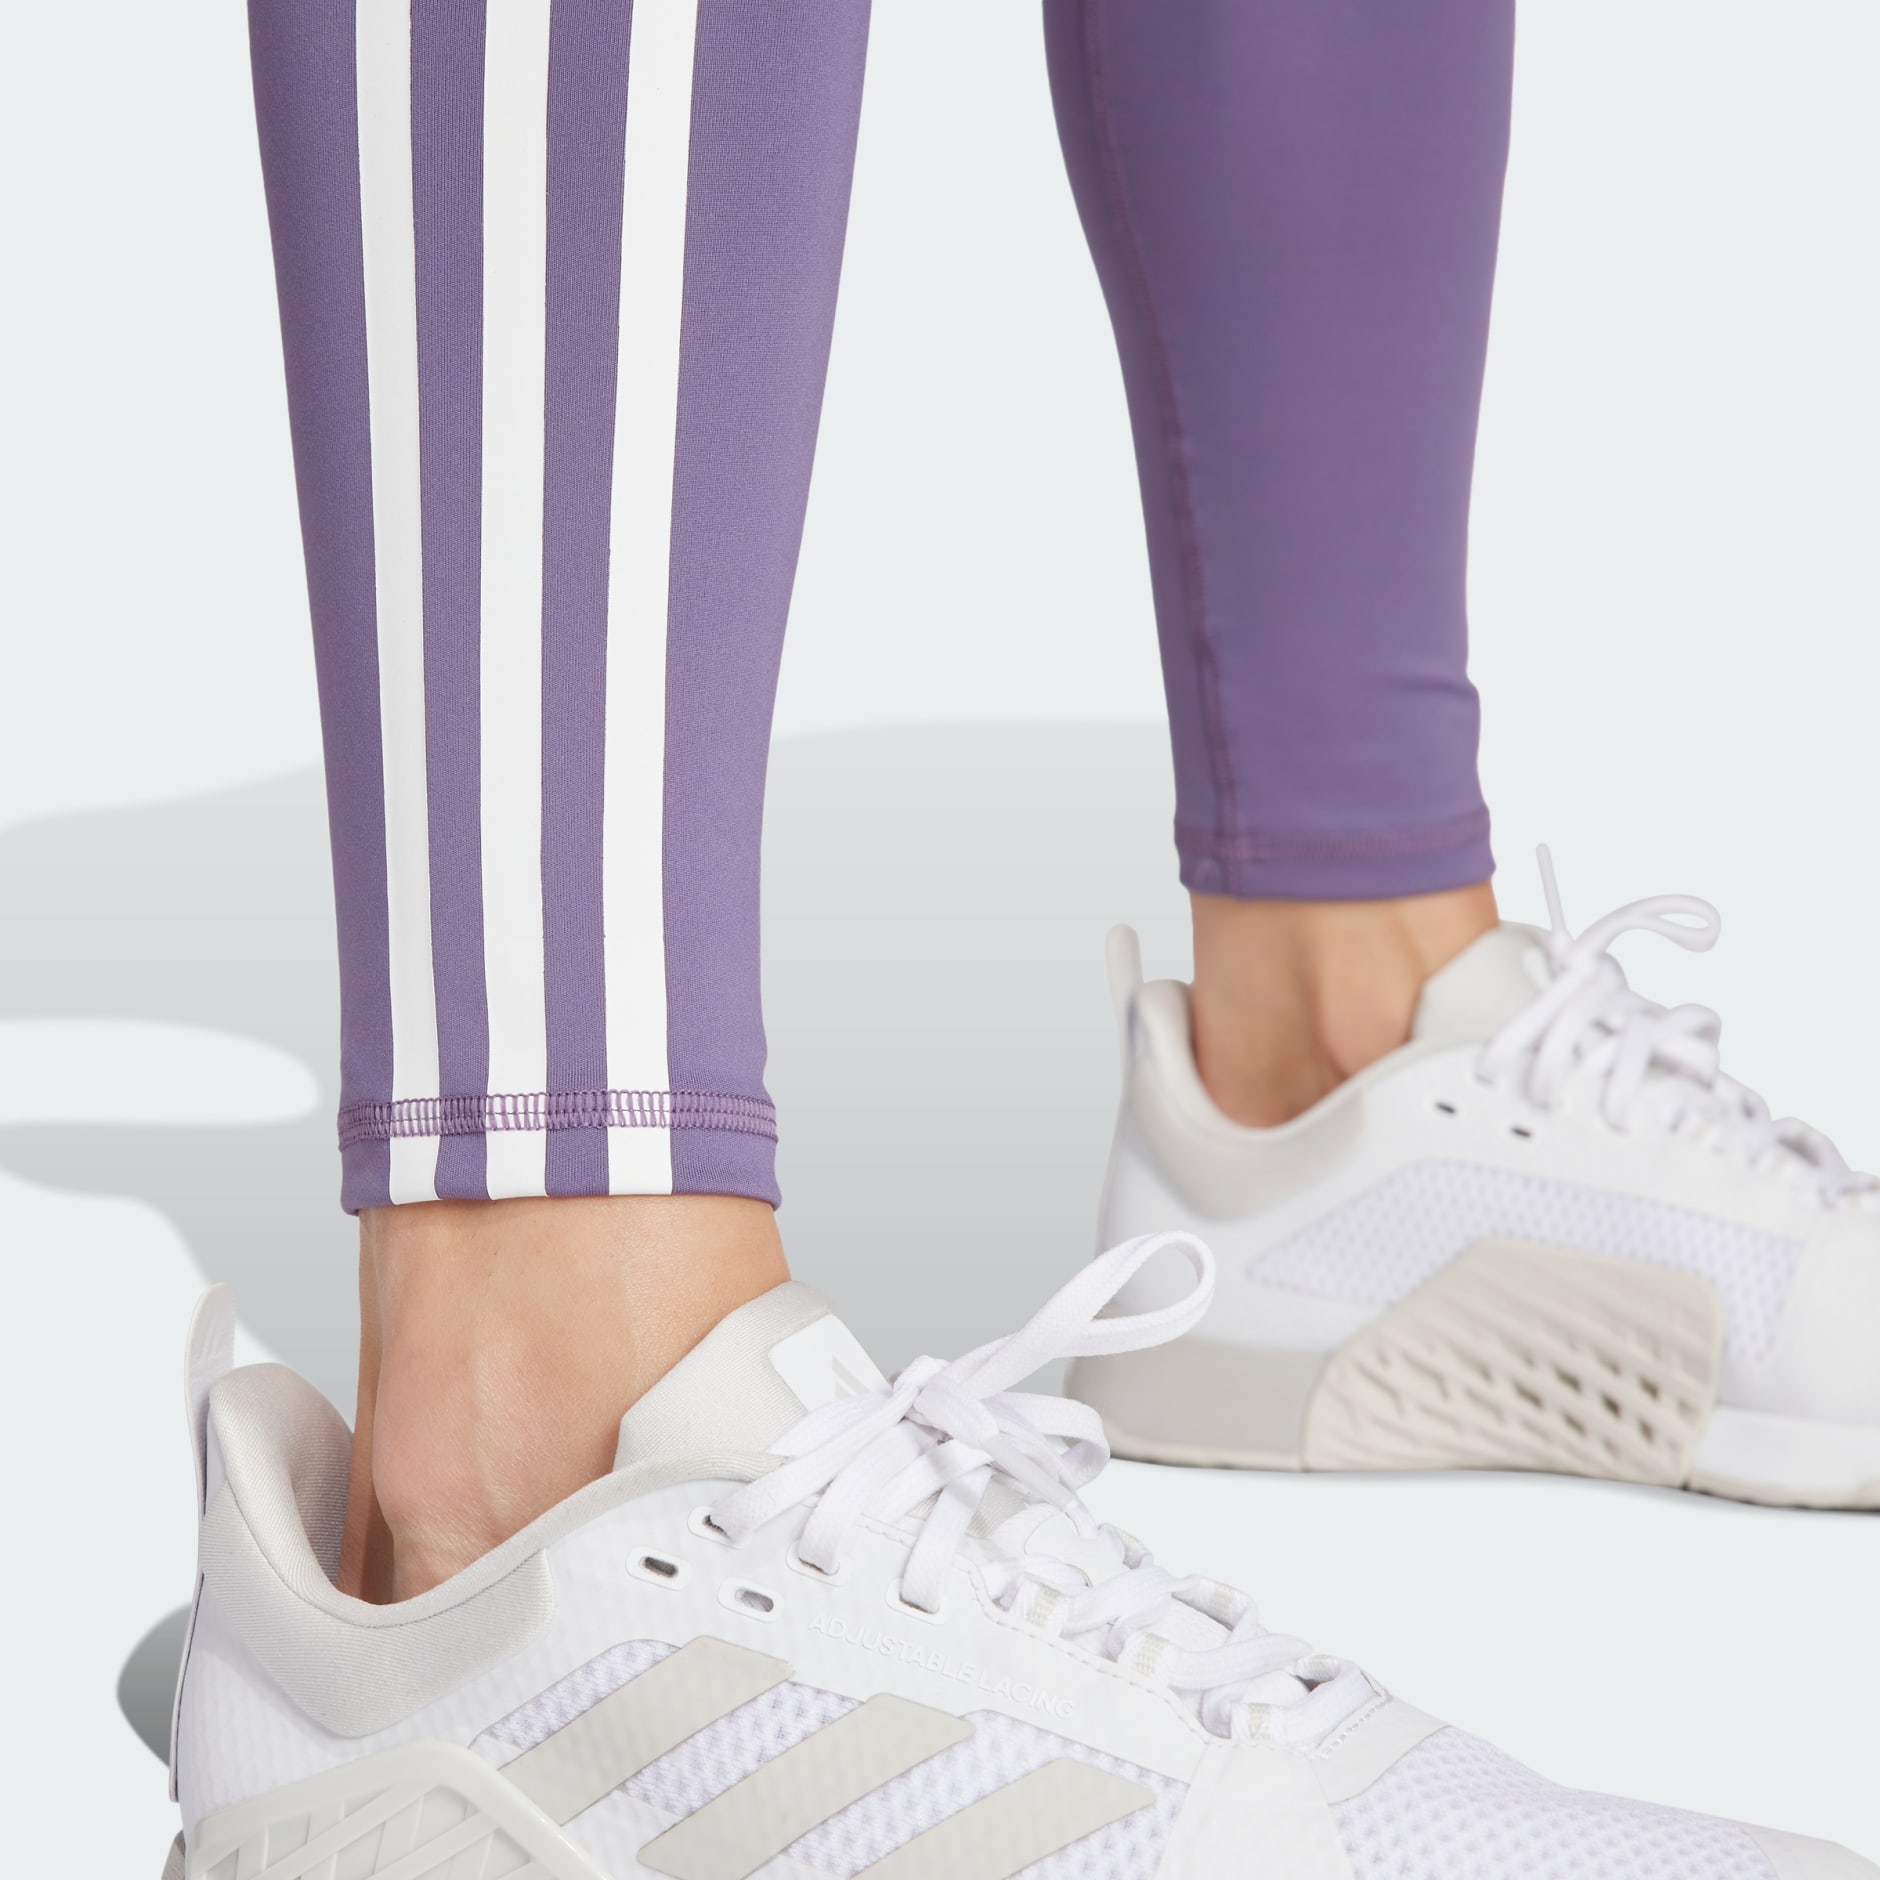 Hyperglam leggings - adidas Performance - Women